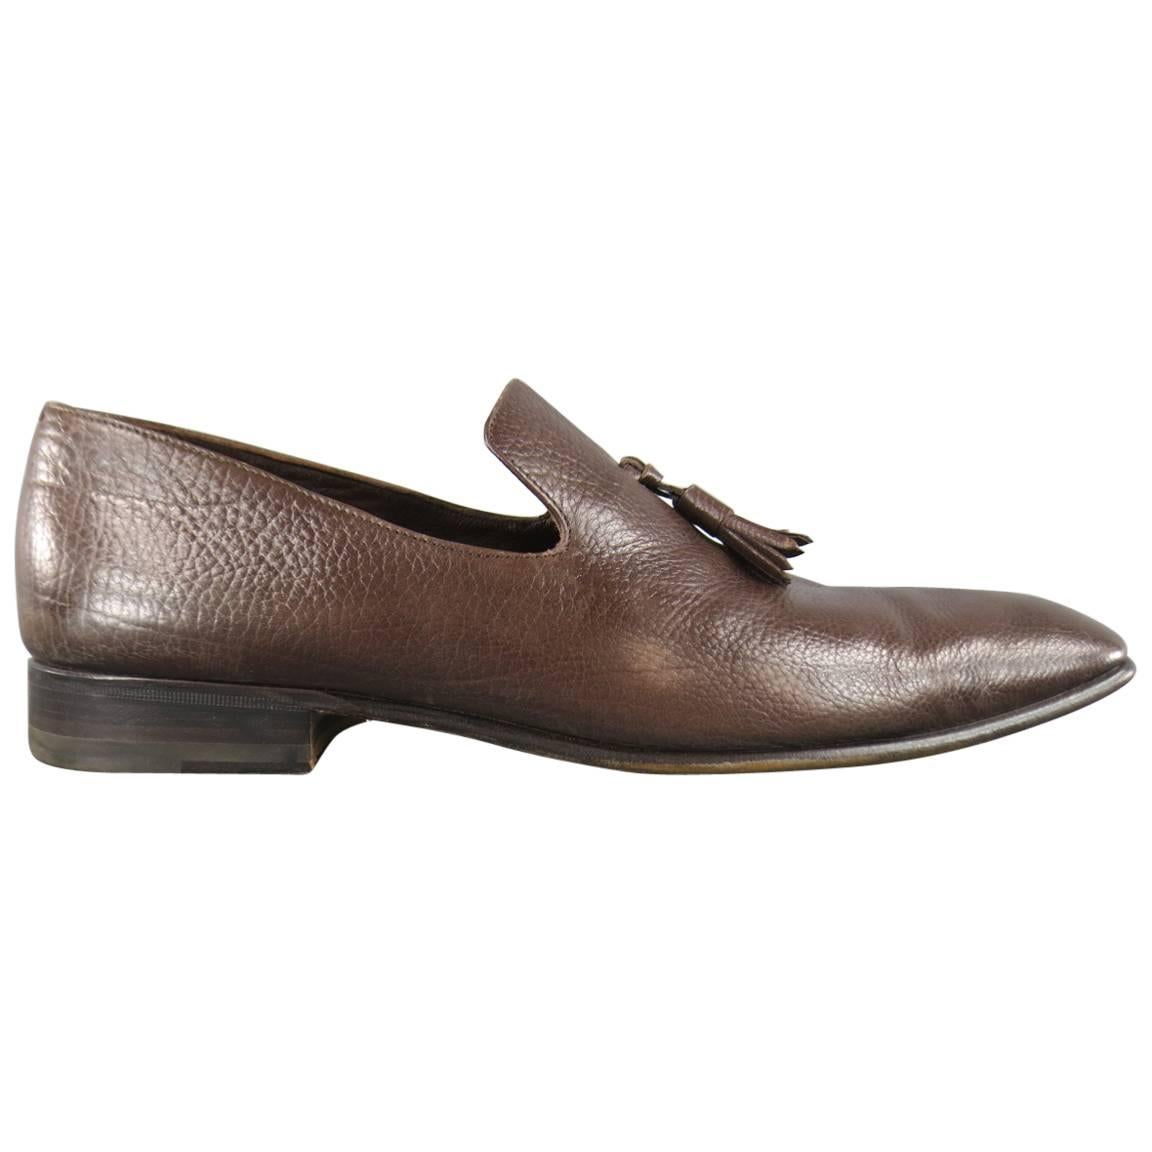 Men's YVES SAINT LAURENT Size 7.5 Brown Leather Tassel Loafers